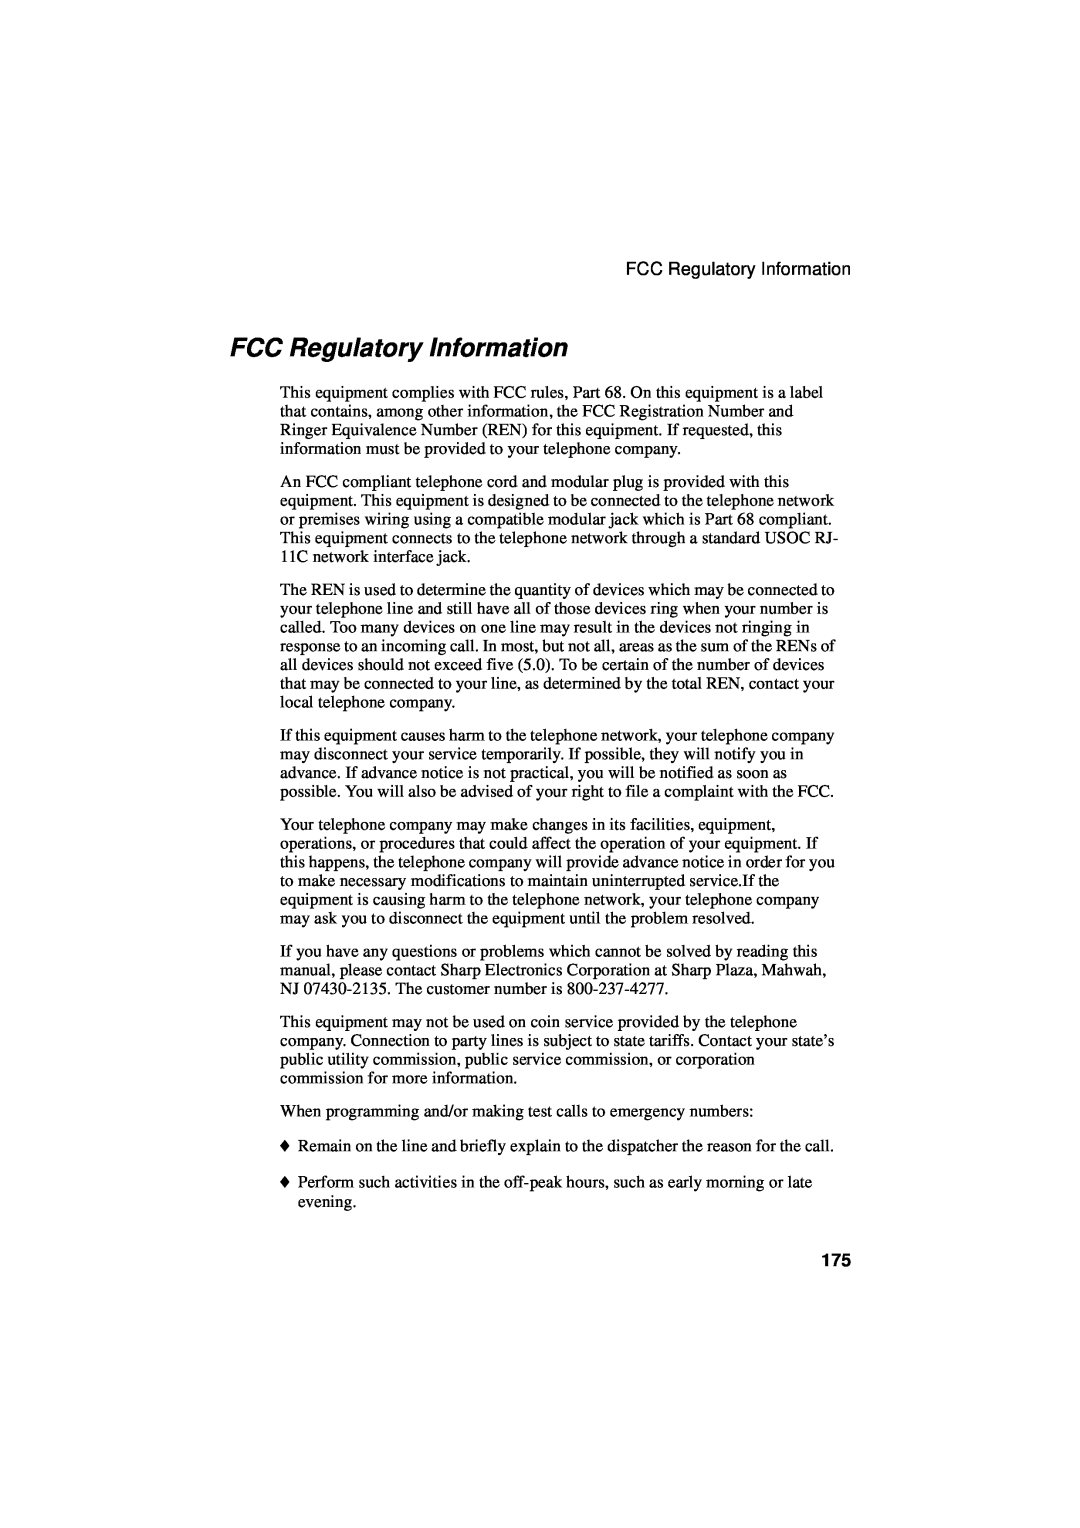 Sharp FO-5700, FO-4700, FO-5550 operation manual FCC Regulatory Information 